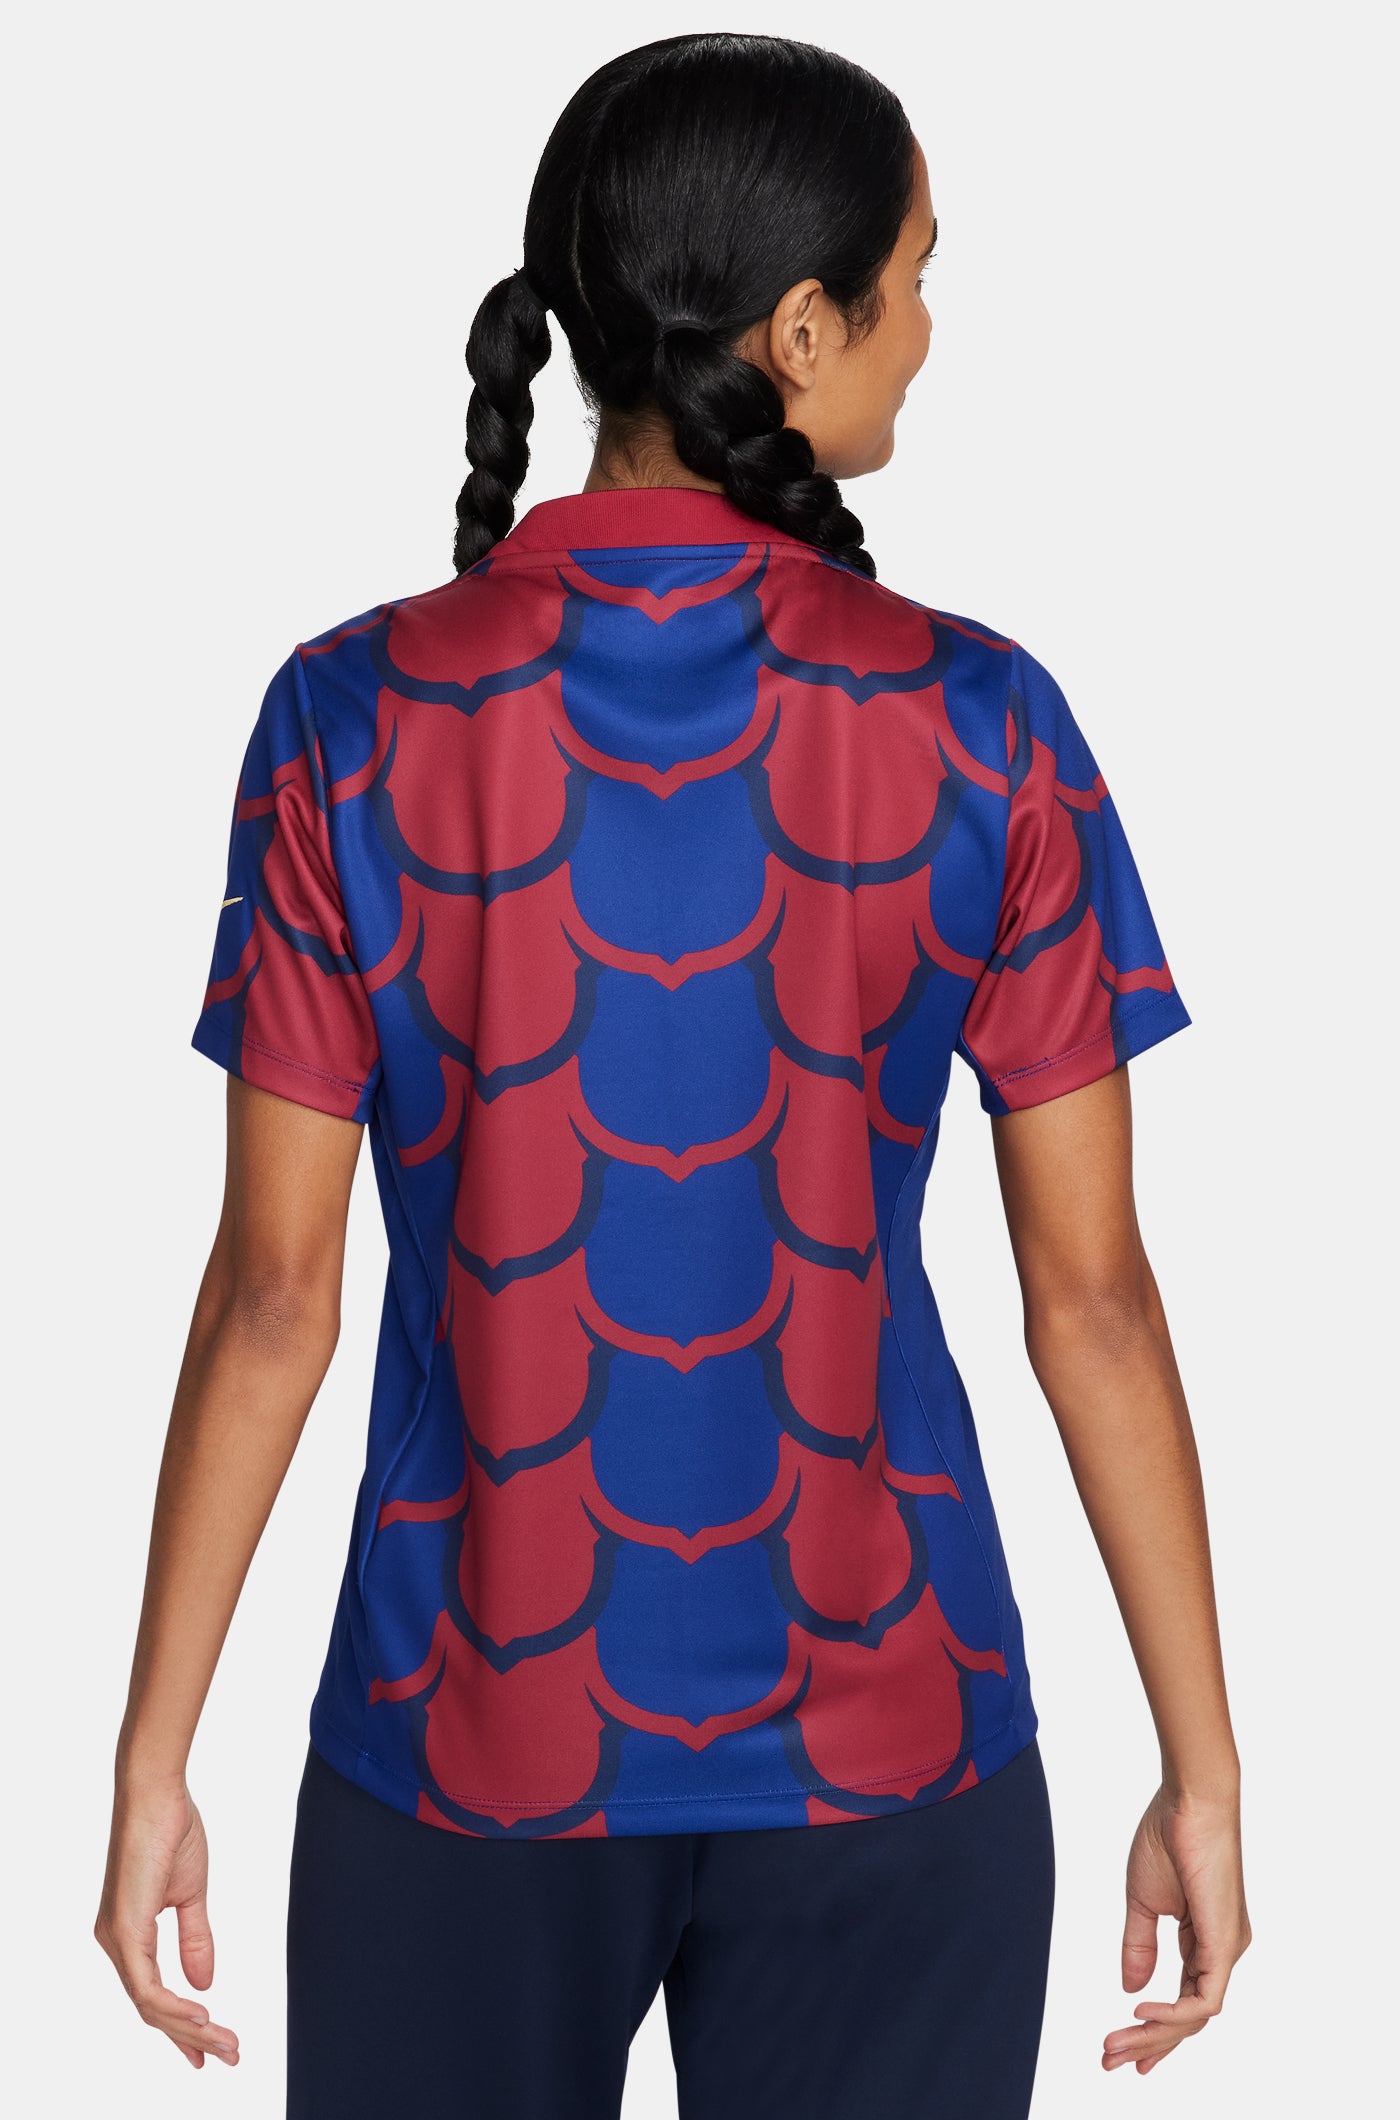 Camiseta Pre-Partido blaugrana FC Barcelona - Mujer